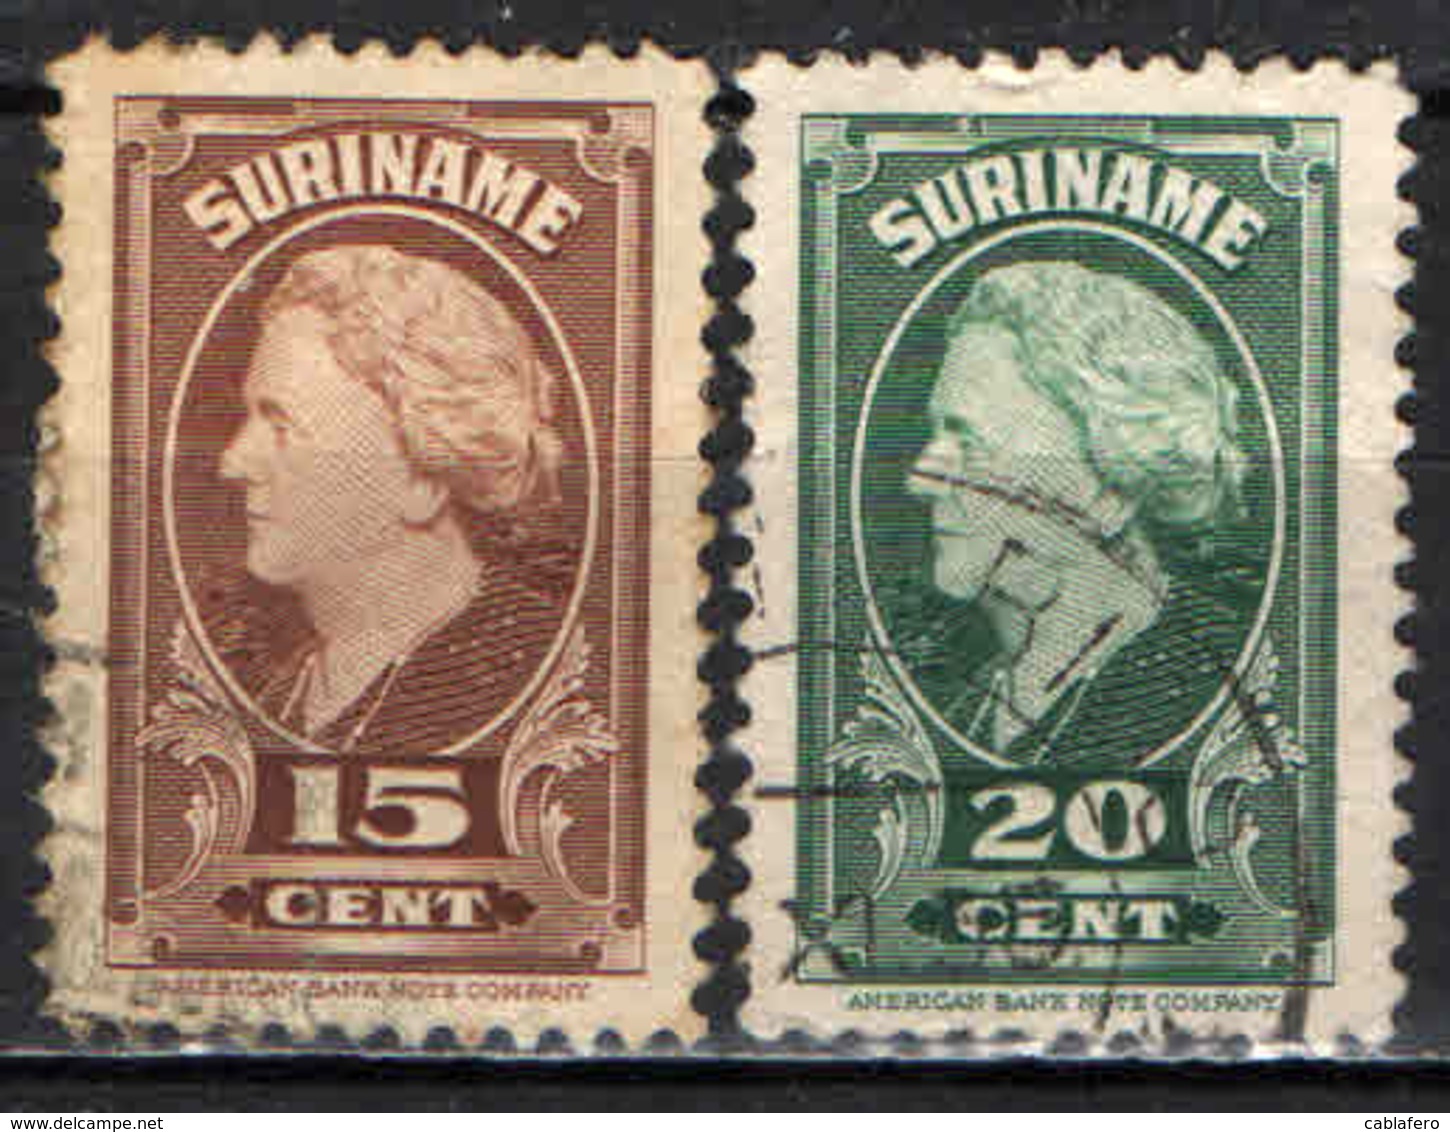 SURINAME - 1945 - EFFIGIE DELLA REGINA GUGLIELMINA - USATI - Suriname